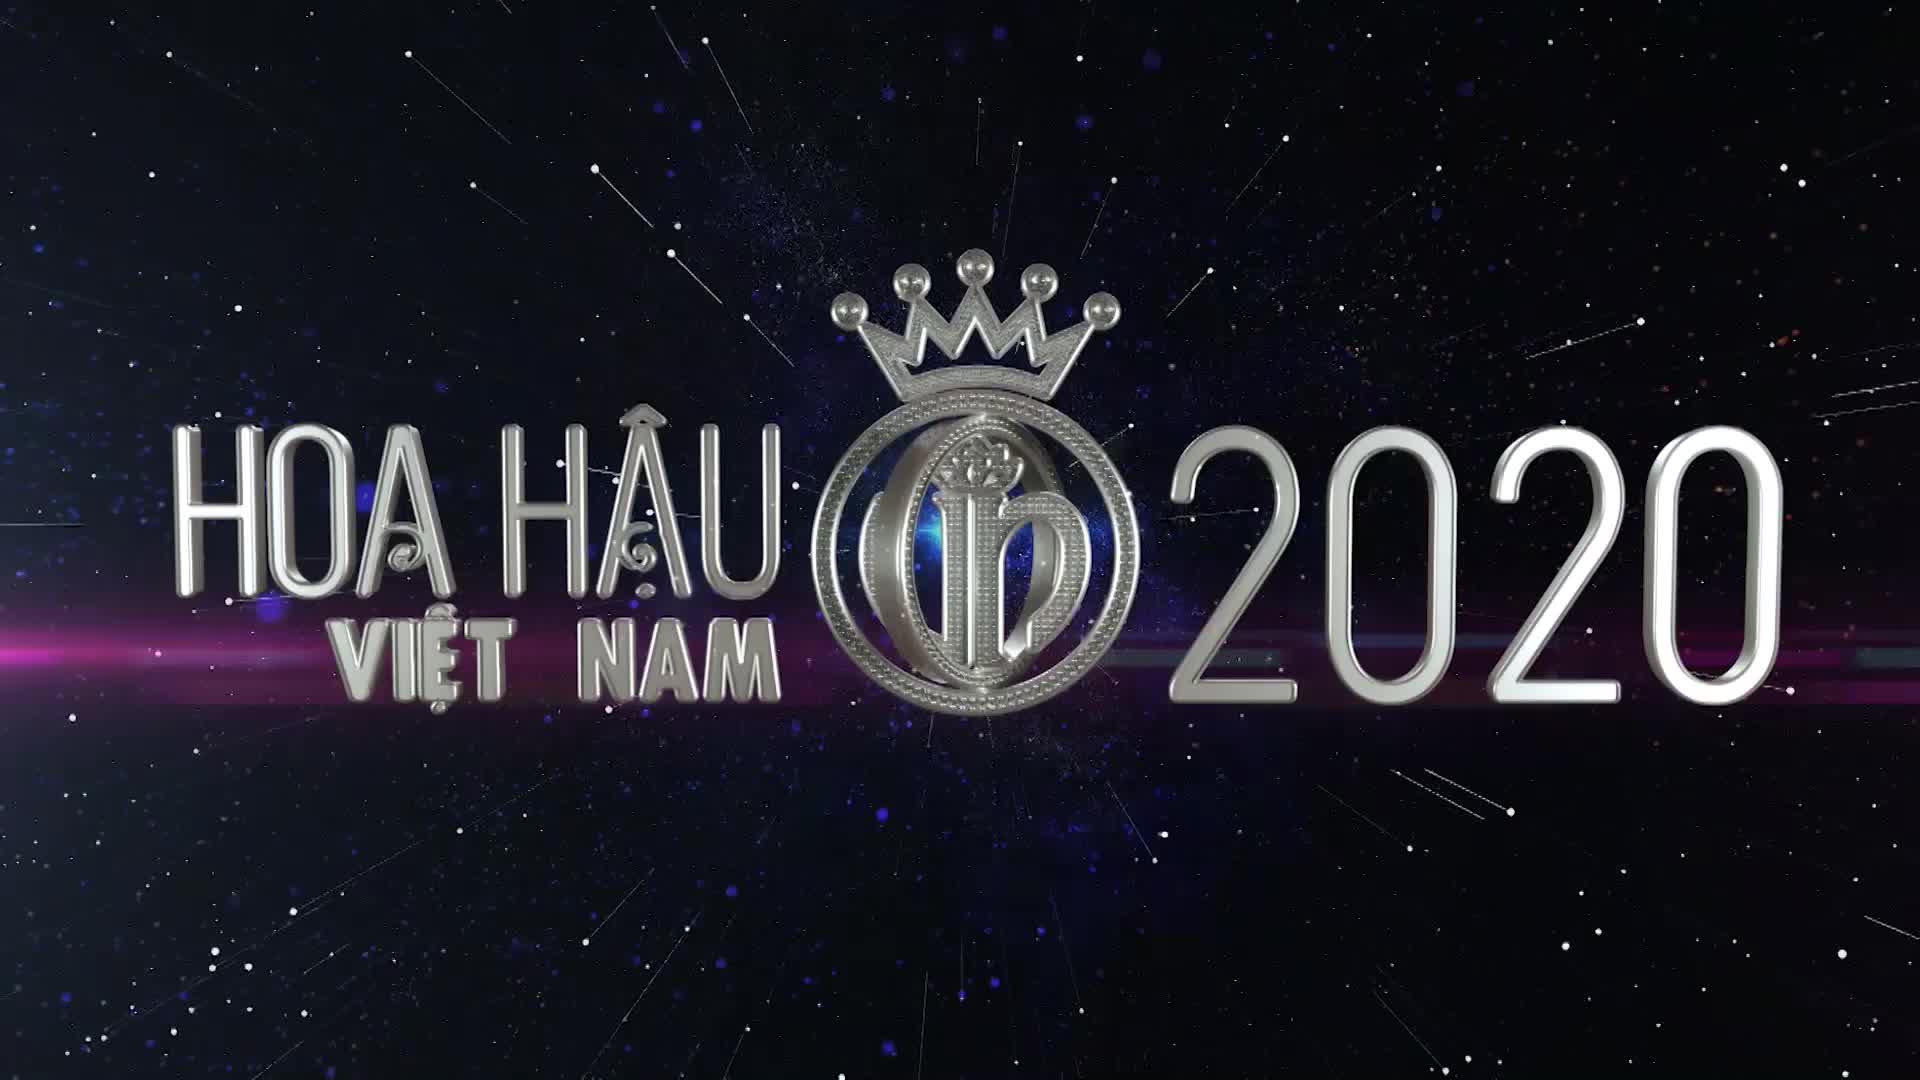 6 - VIET NAM 2020 - DAM VINH HUNG